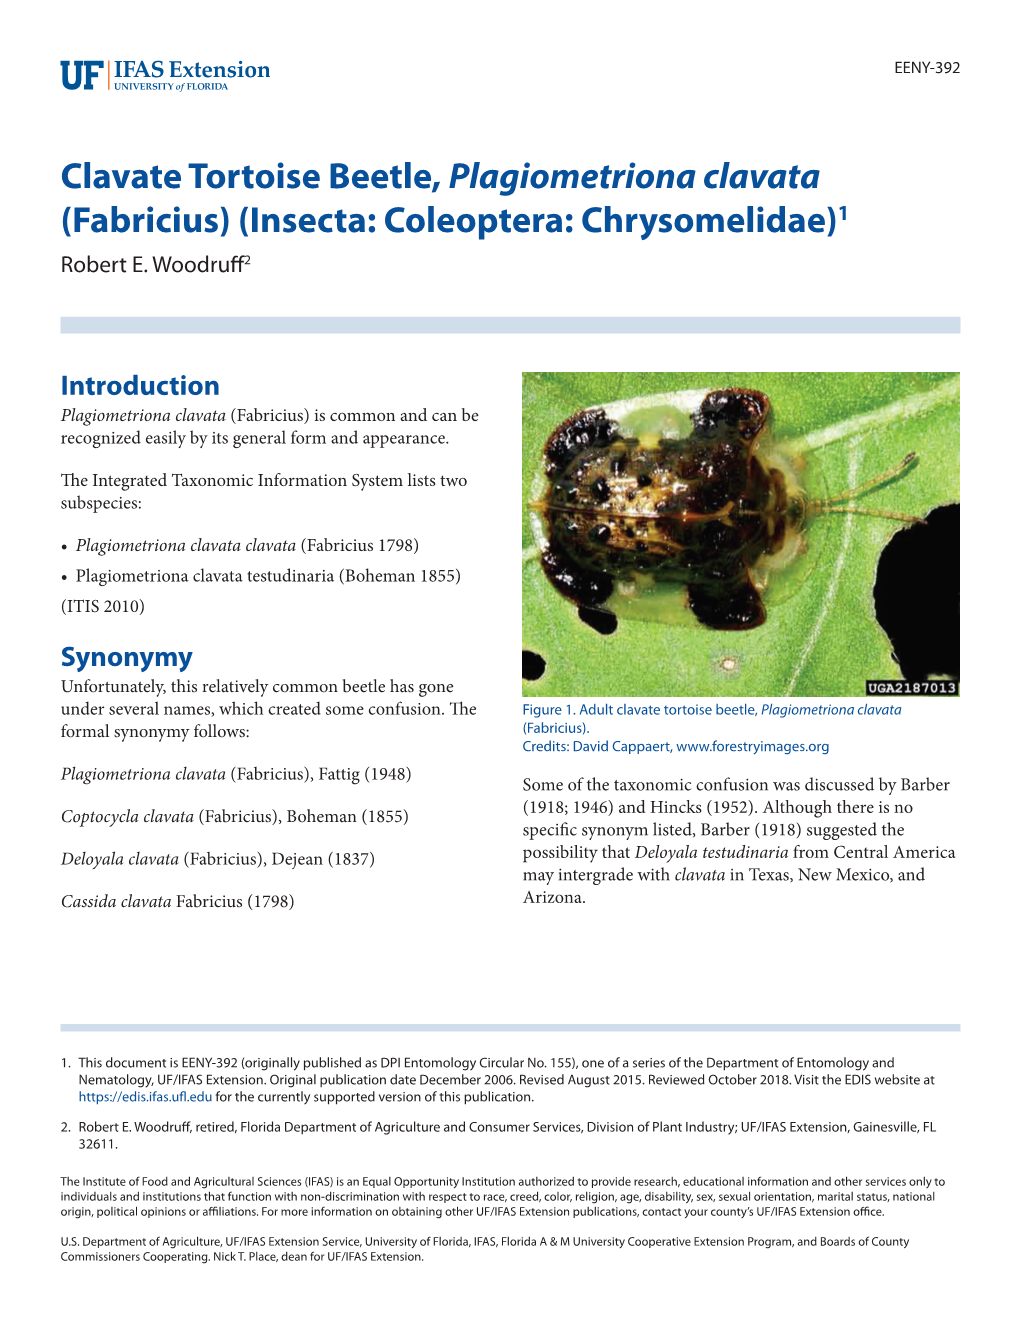 Clavate Tortoise Beetle, Plagiometriona Clavata (Fabricius) (Insecta: Coleoptera: Chrysomelidae)1 Robert E